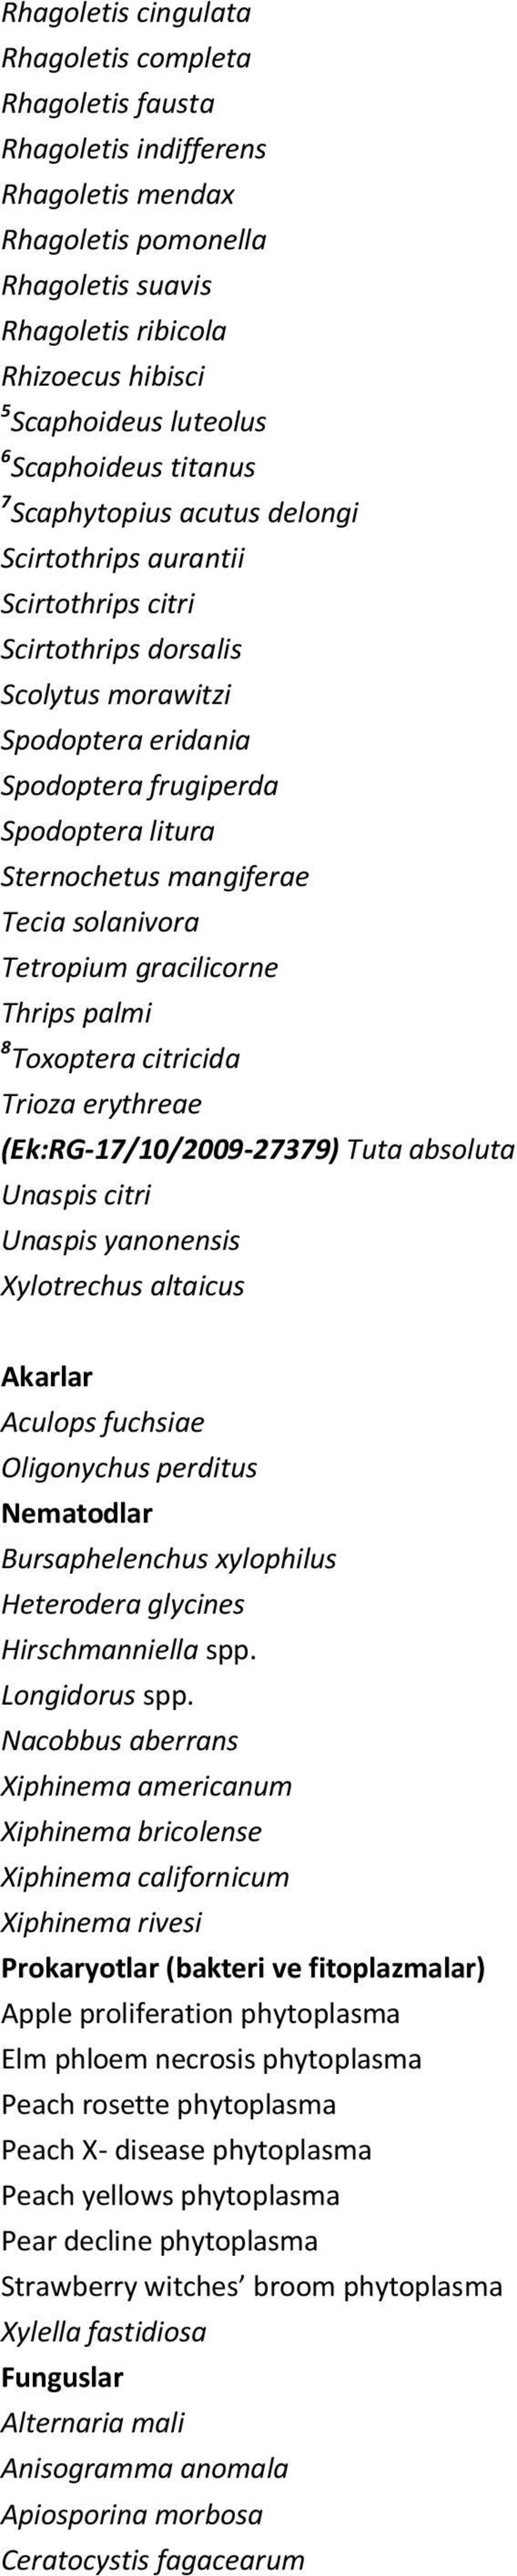 Sternochetus mangiferae Tecia solanivora Tetropium gracilicorne Thrips palmi 8 Toxoptera citricida Trioza erythreae (Ek:RG-17/10/2009-27379) Tuta absoluta Unaspis citri Unaspis yanonensis Xylotrechus